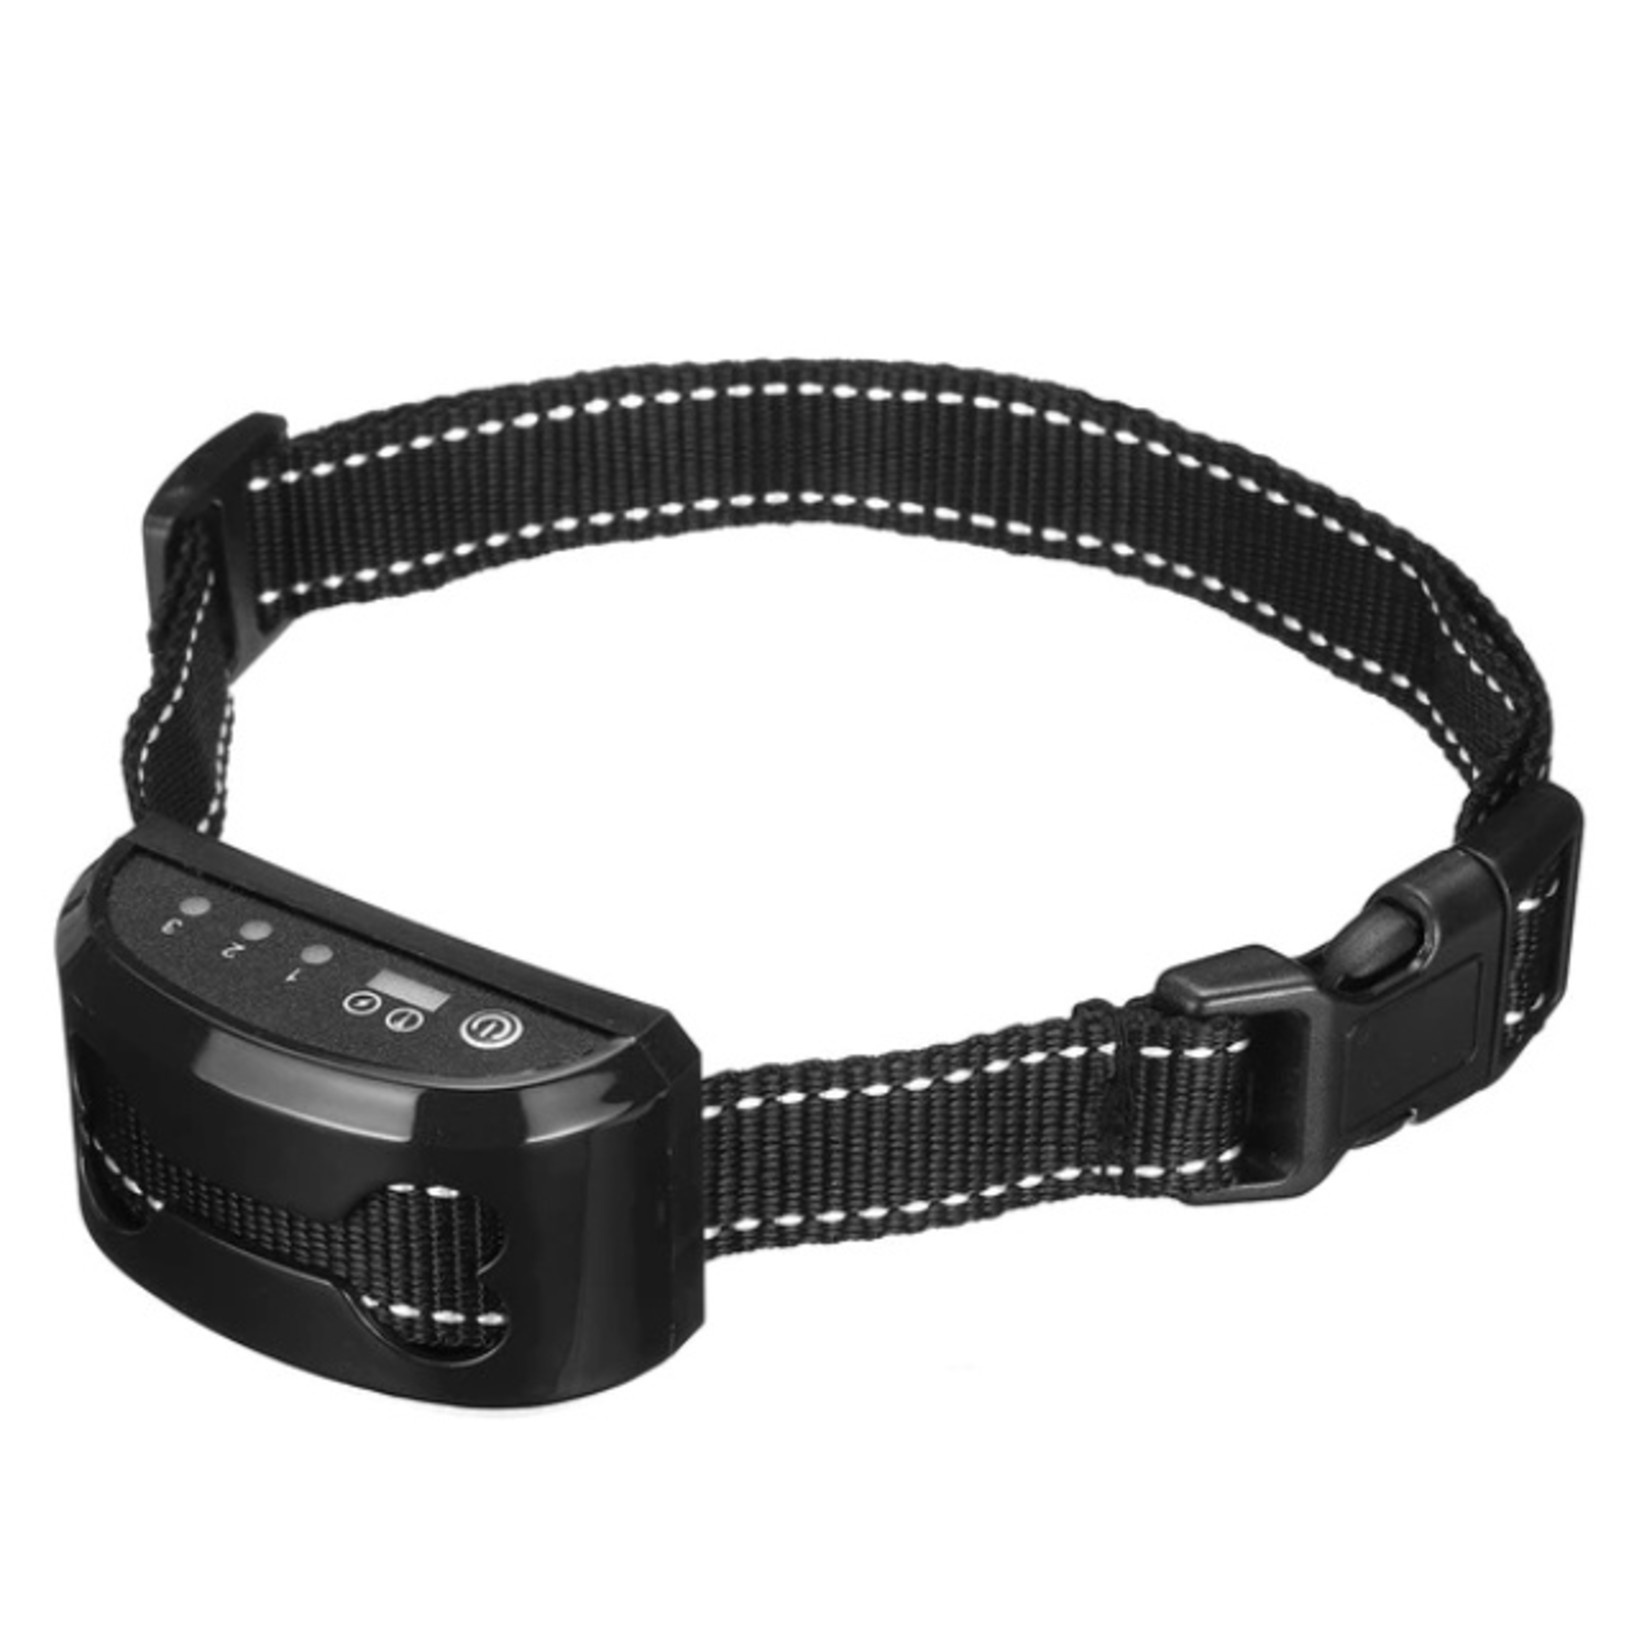 USB Oplaadbare Anti Blafband voor honden - Ultrasone honden Training Halsband - Trillingen Anti blafband - Blafcontrolehalsband voor honden HE Products